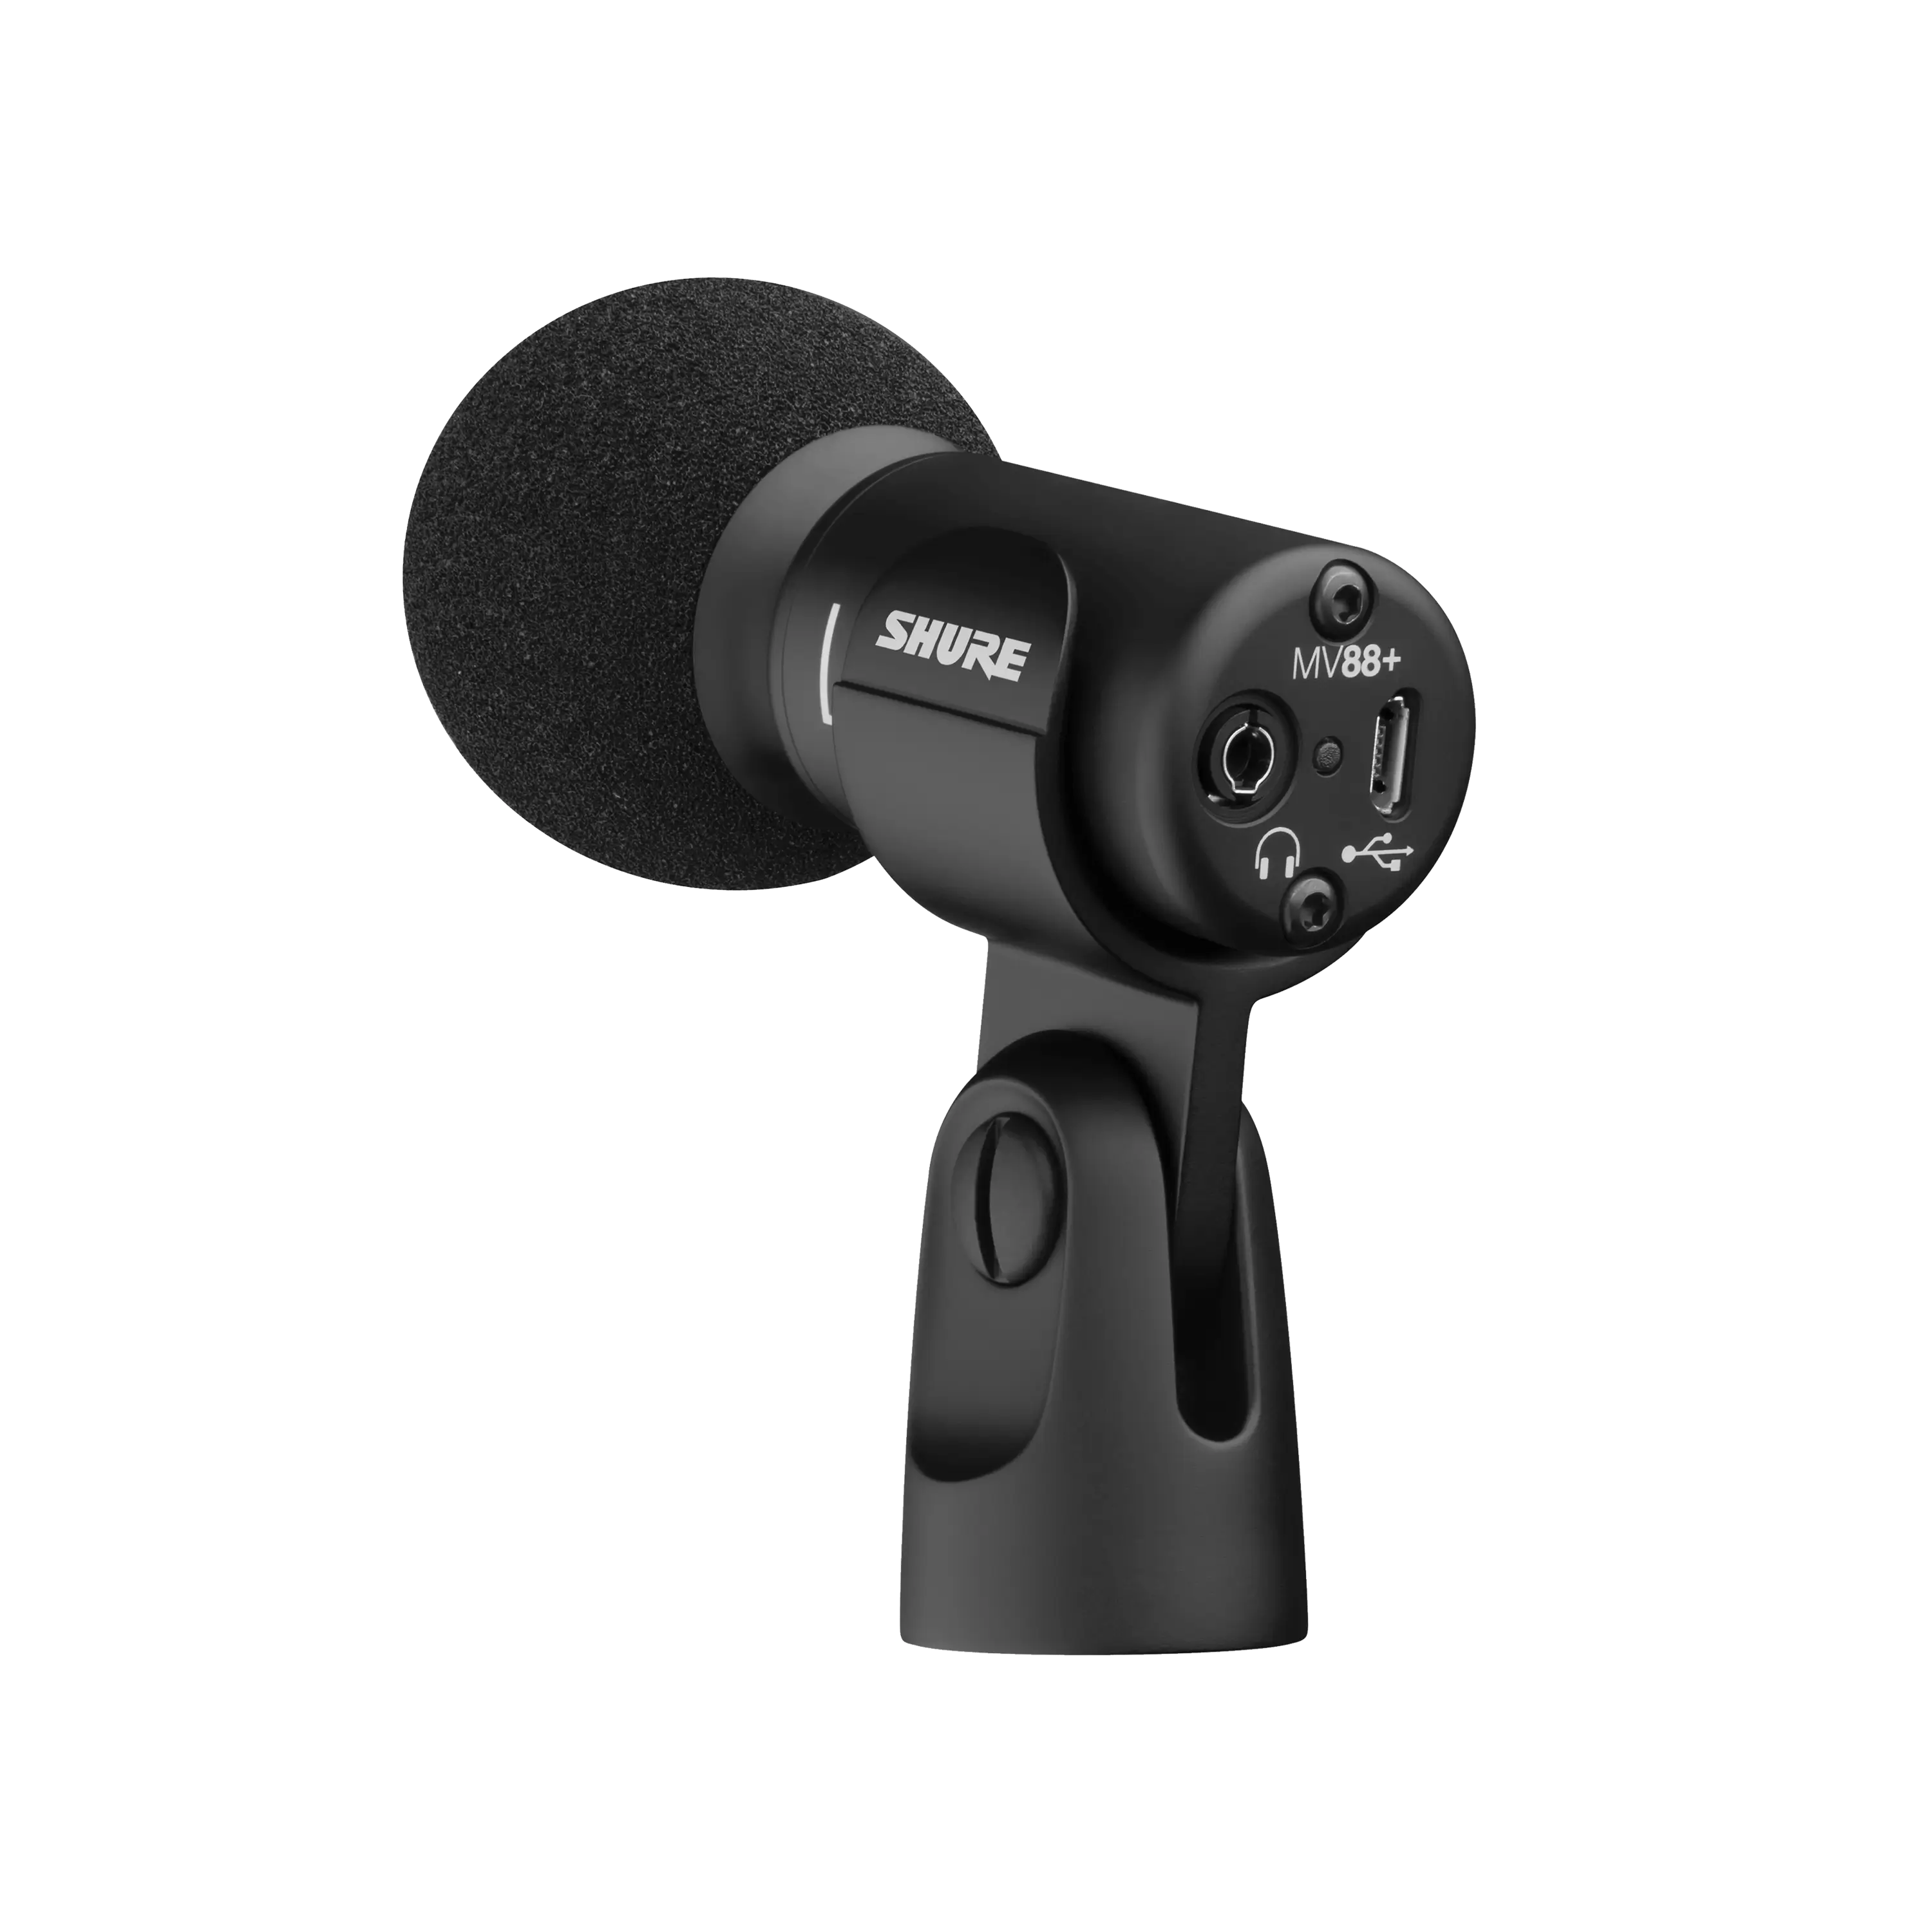 handelaar kiezen Deskundige MV88+ Stereo USB Microphone - Stereo Condenser Microphone - Shure USA